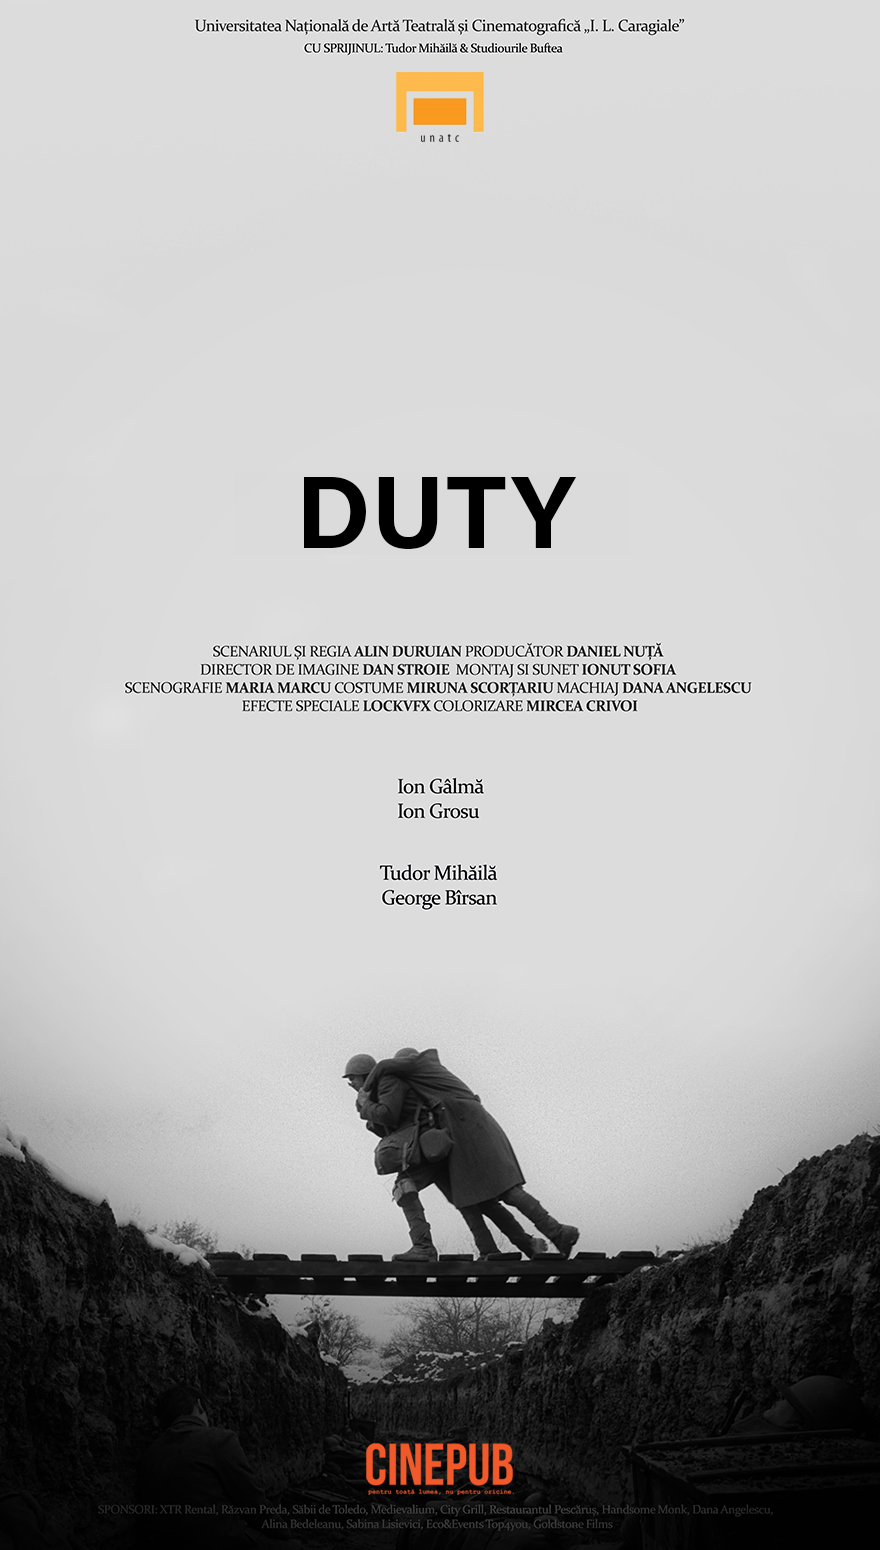 Duty - short film online on CINEPUB